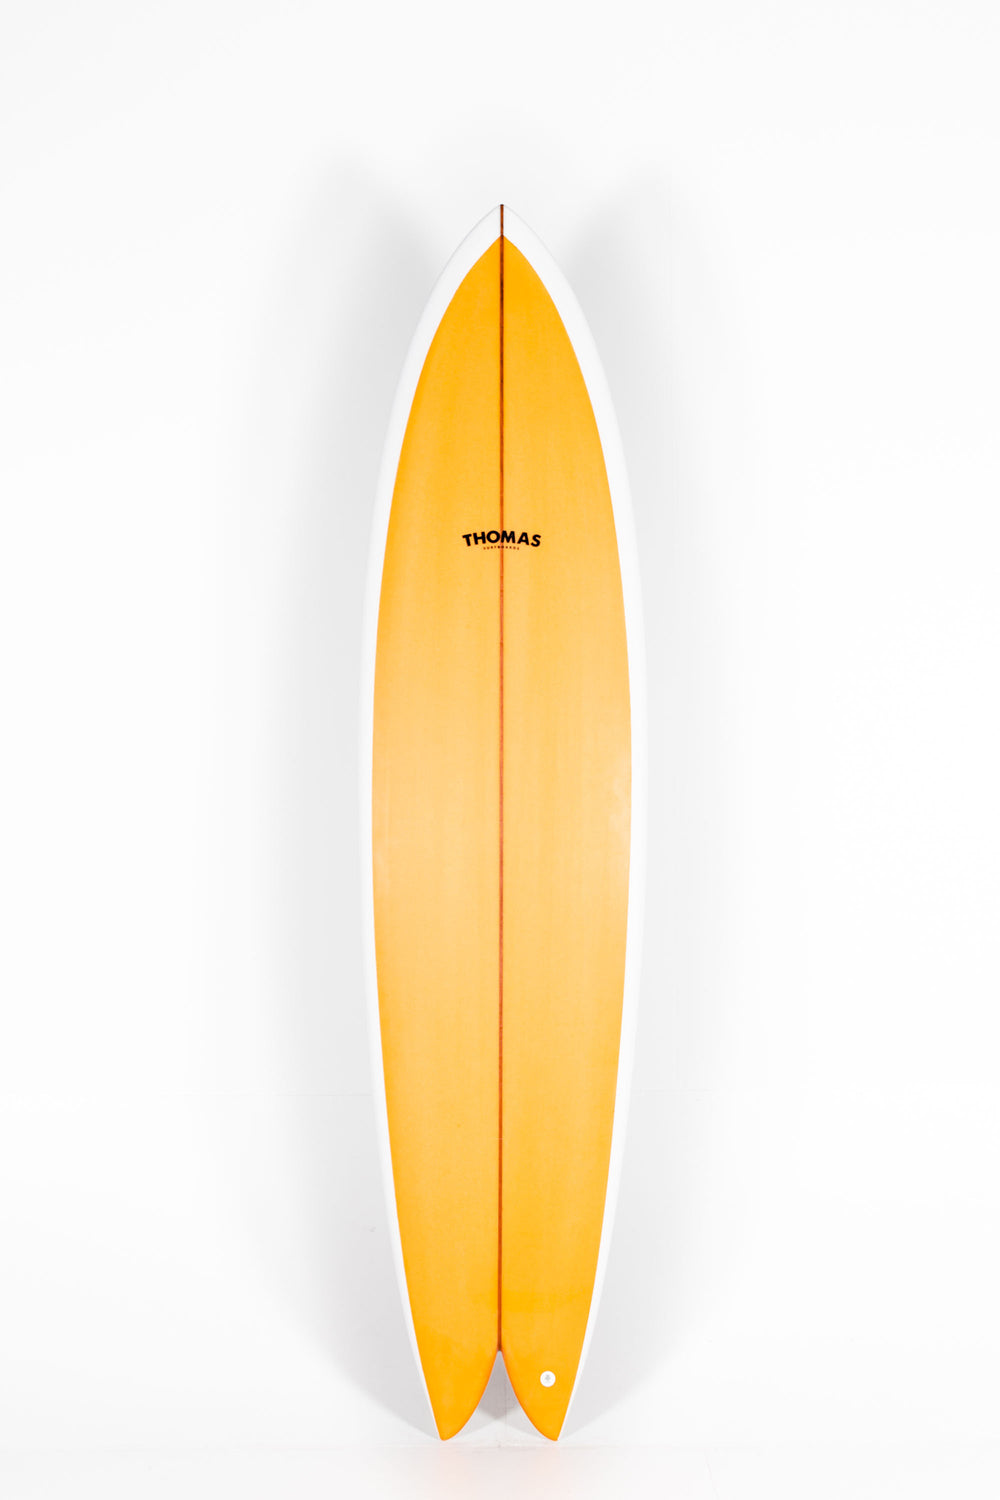 Pukas Surf Shop - Thomas Surfboards - LONG FISH - 7'8